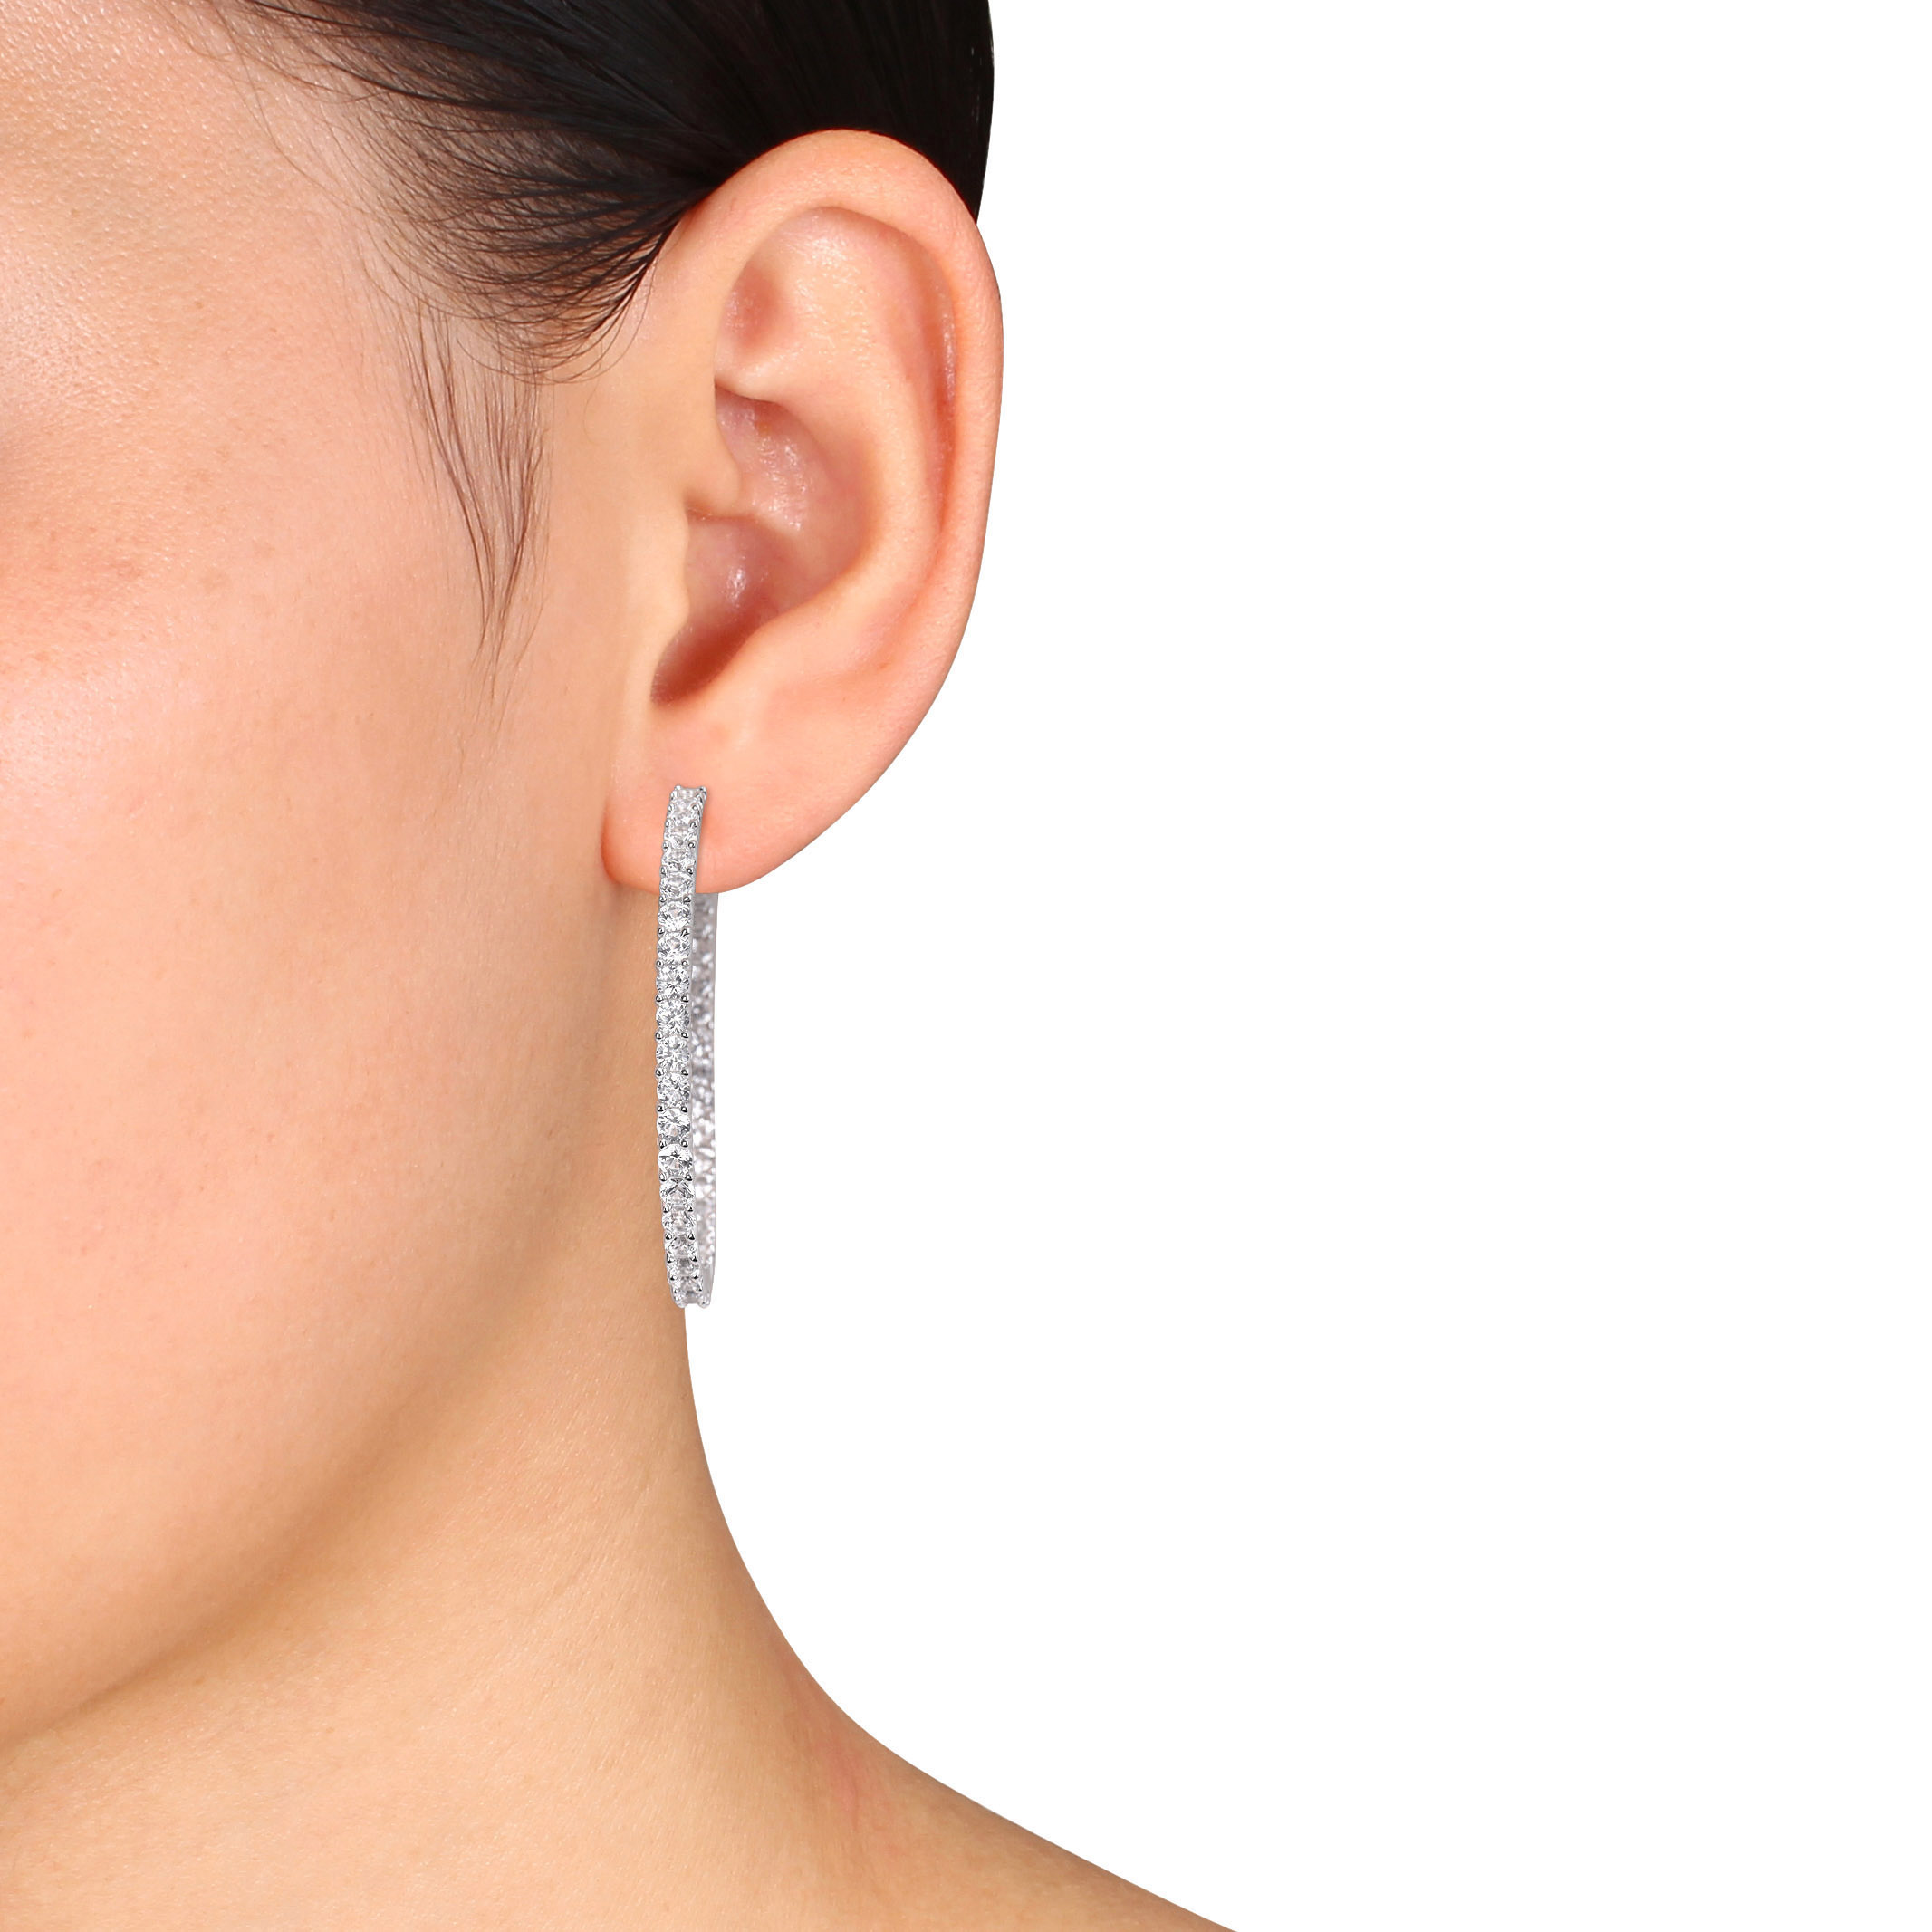 11 3/4 CT TGW Created White Sapphire Hoop Earrings in Sterling Silver